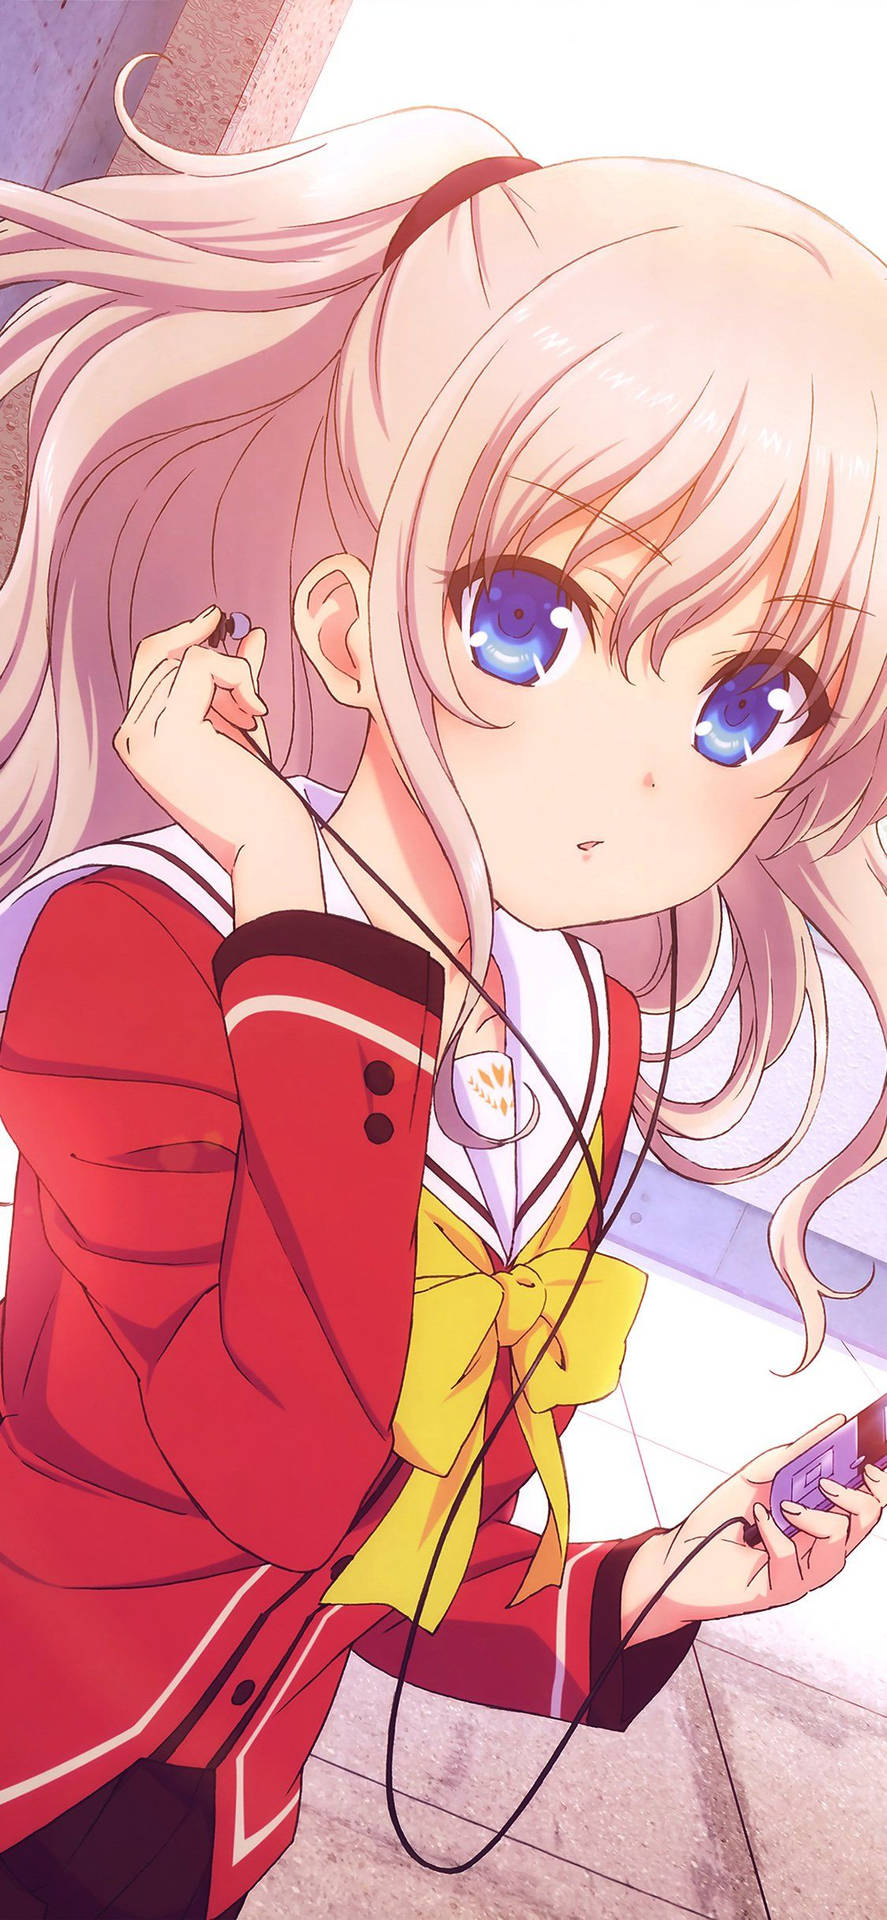 Music Lover Cute Anime Girl iPhone Wallpaper